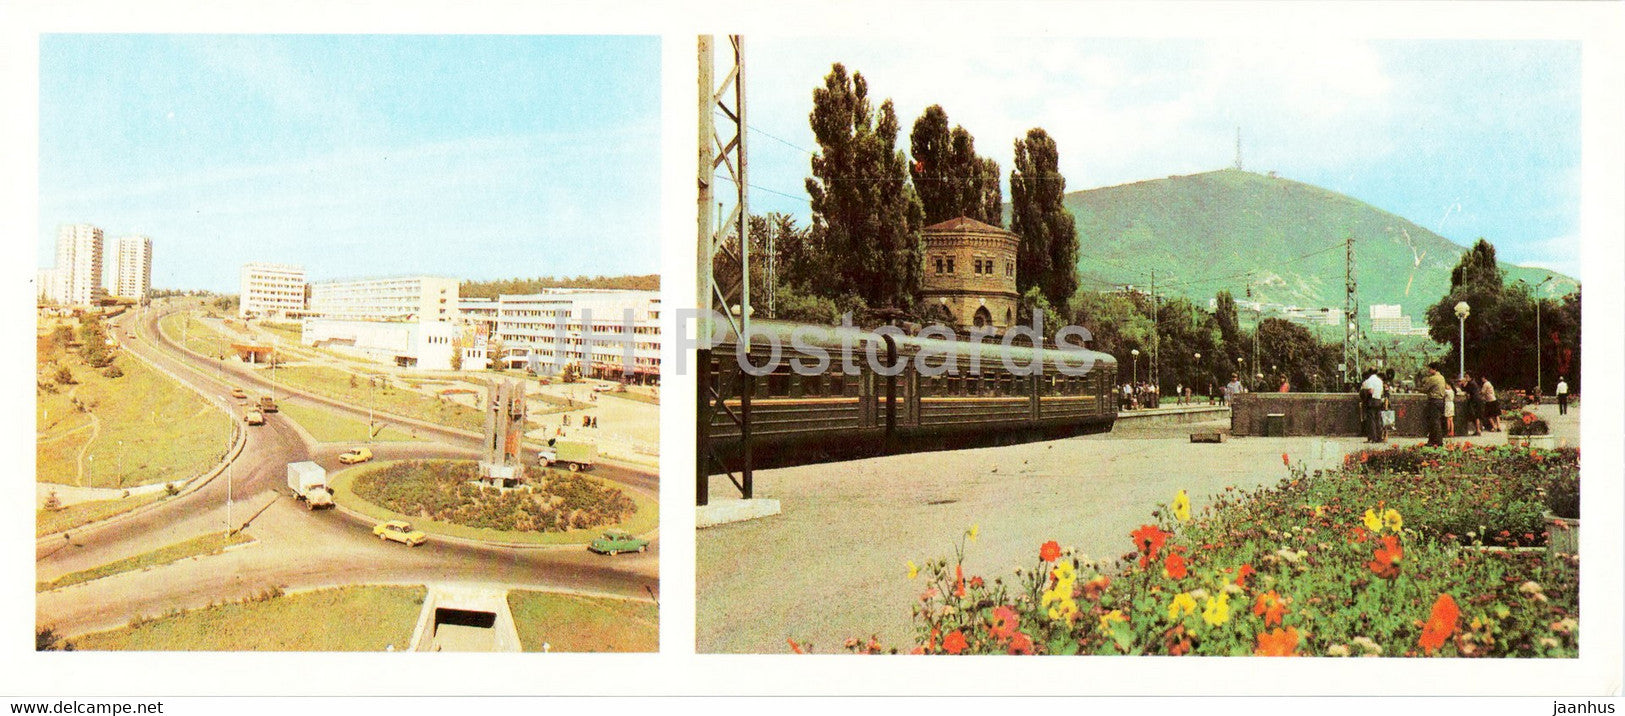 Pyatigorsk - Student Campus - Railway Station - train - 1983 - Russia USSR - unused - JH Postcards